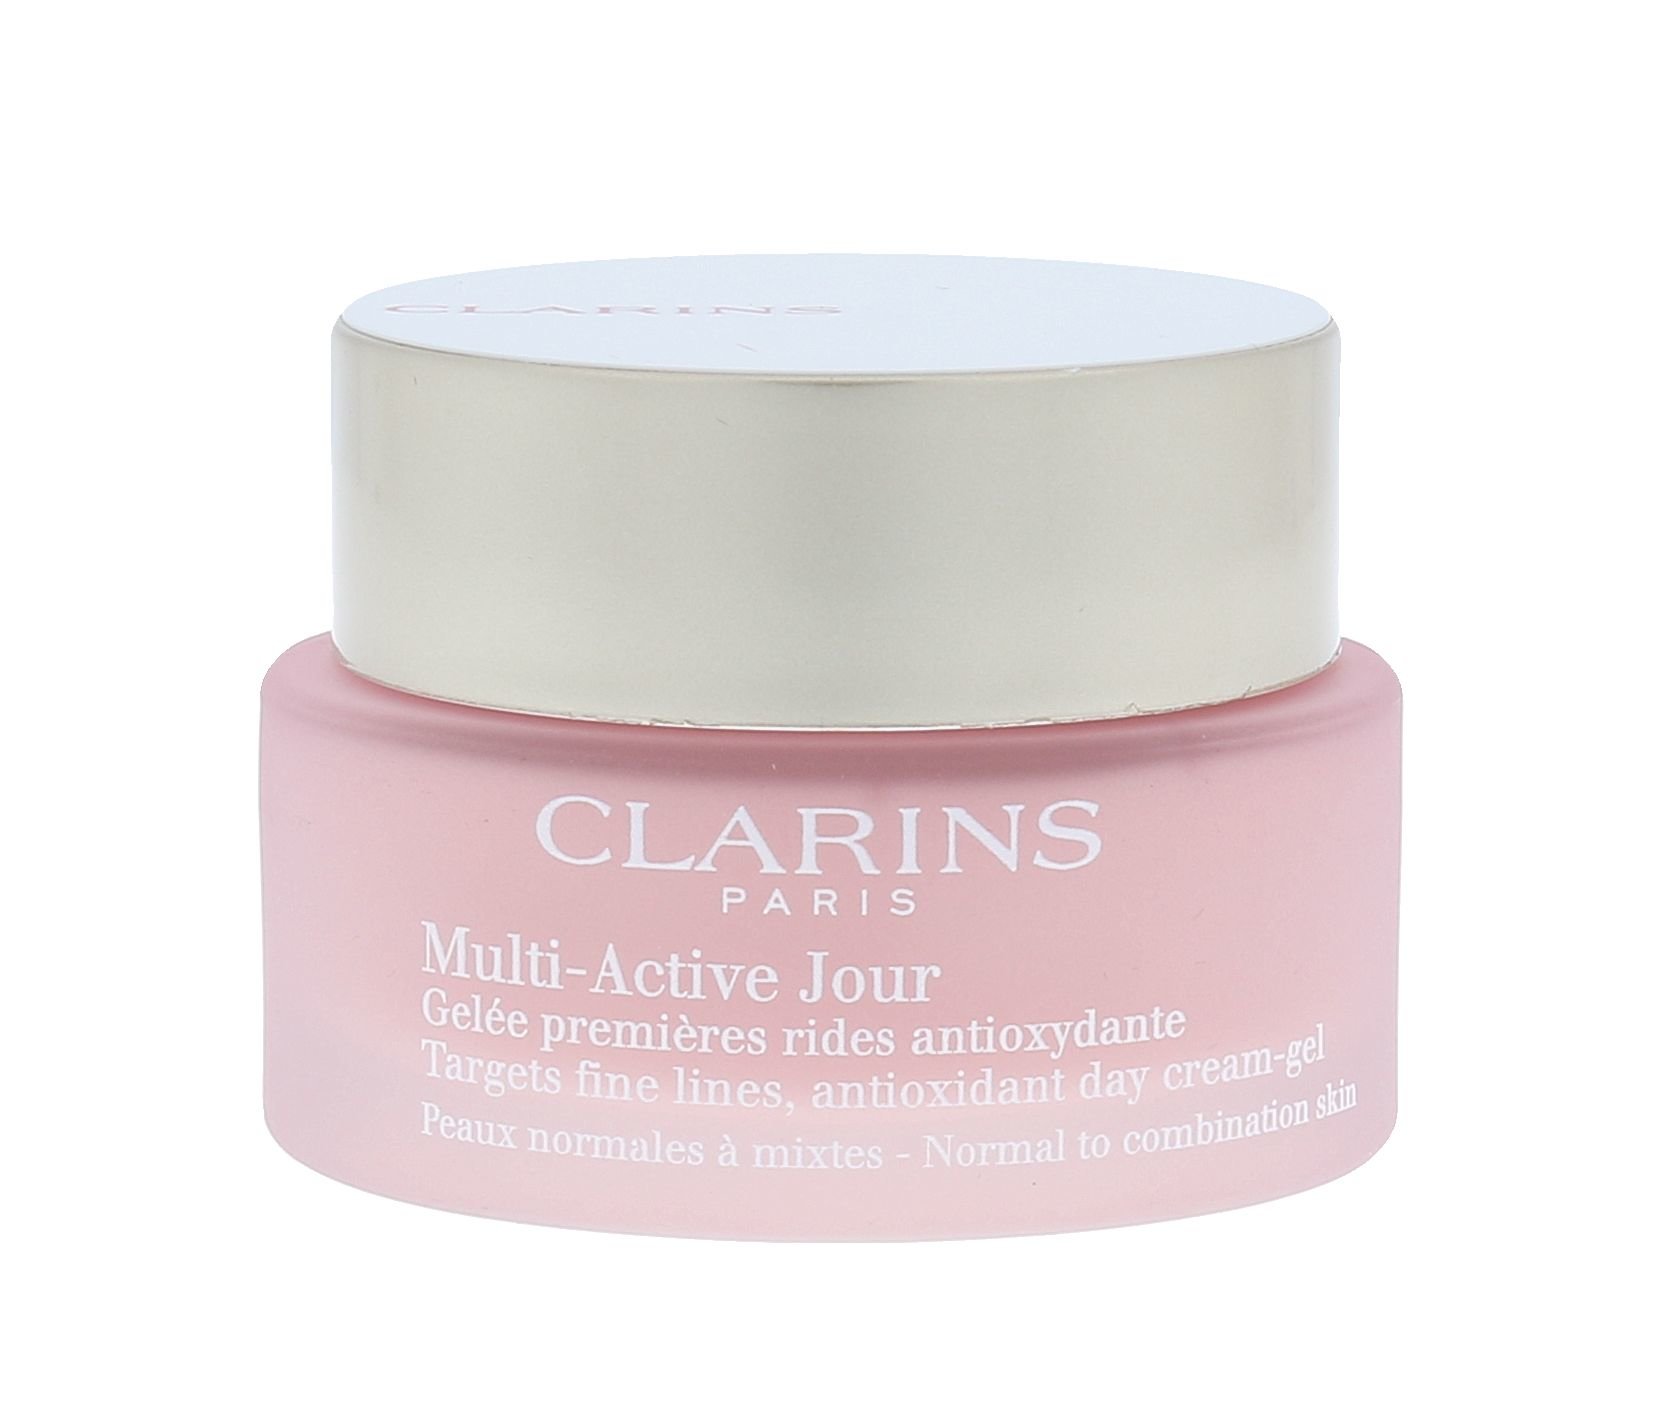 Clarins Multi Active Day Cream Gel